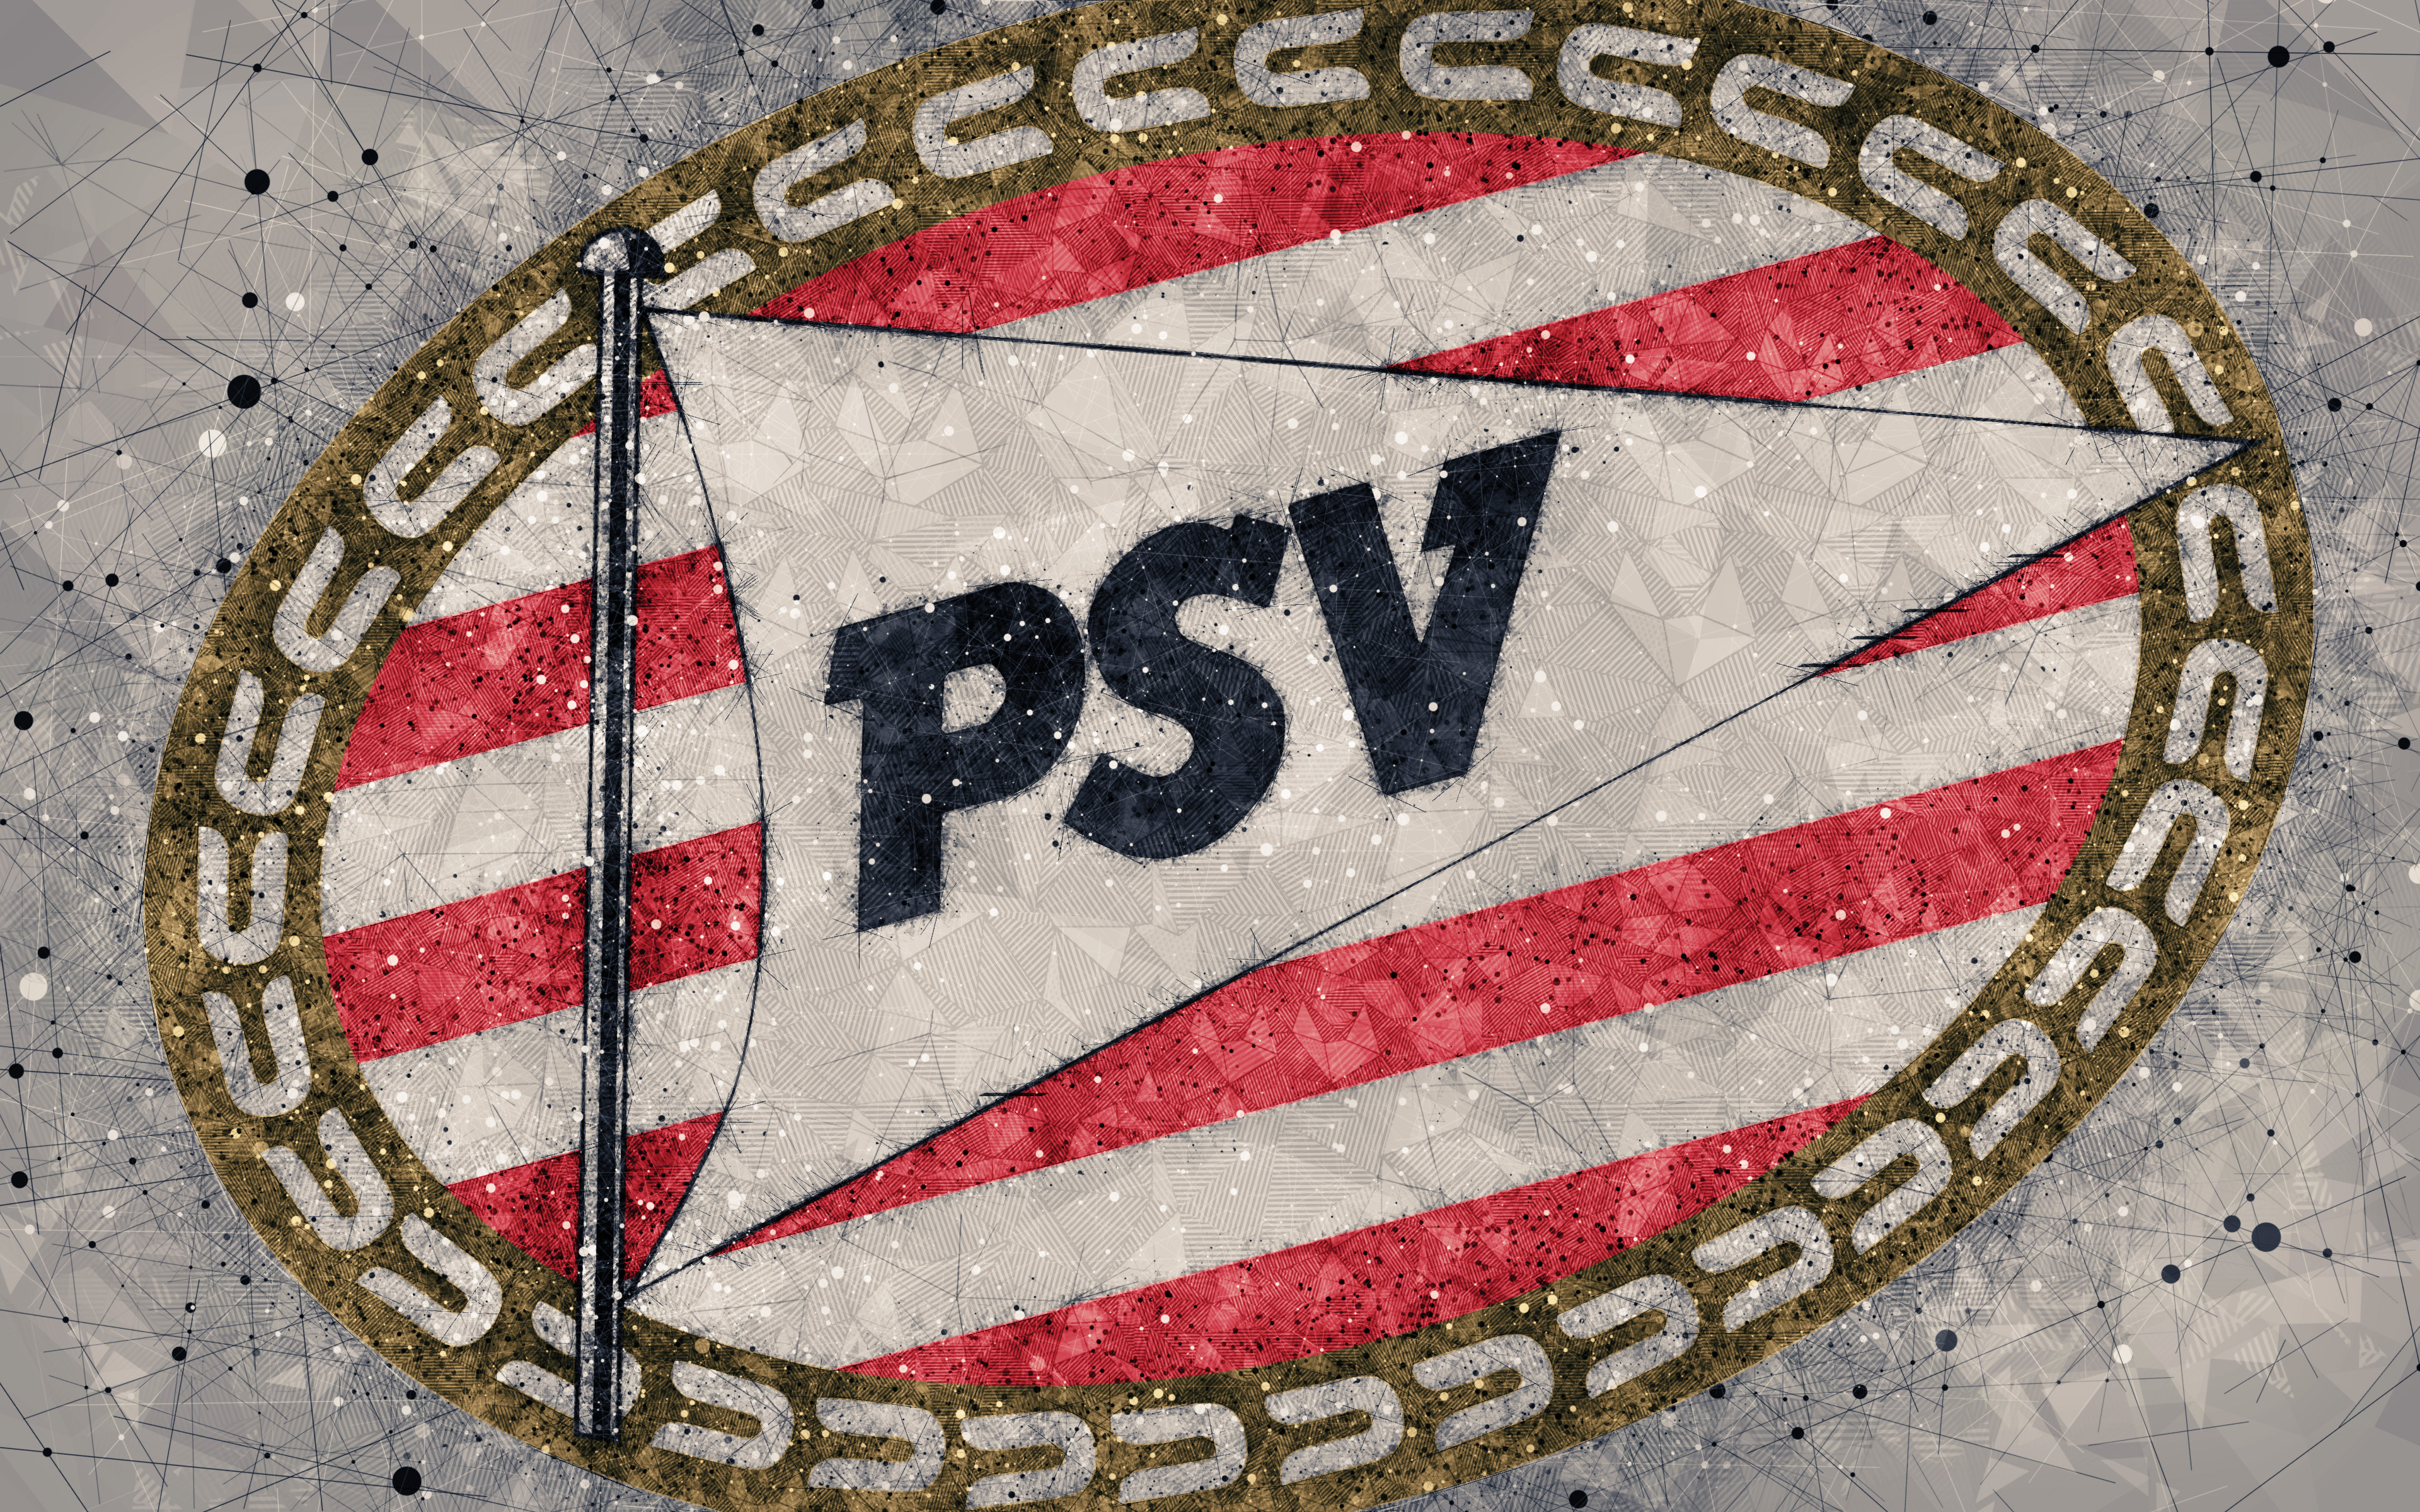 Baixar papel de parede para celular de Esportes, Futebol, Logotipo, Emblema, Psv Eindhoven gratuito.